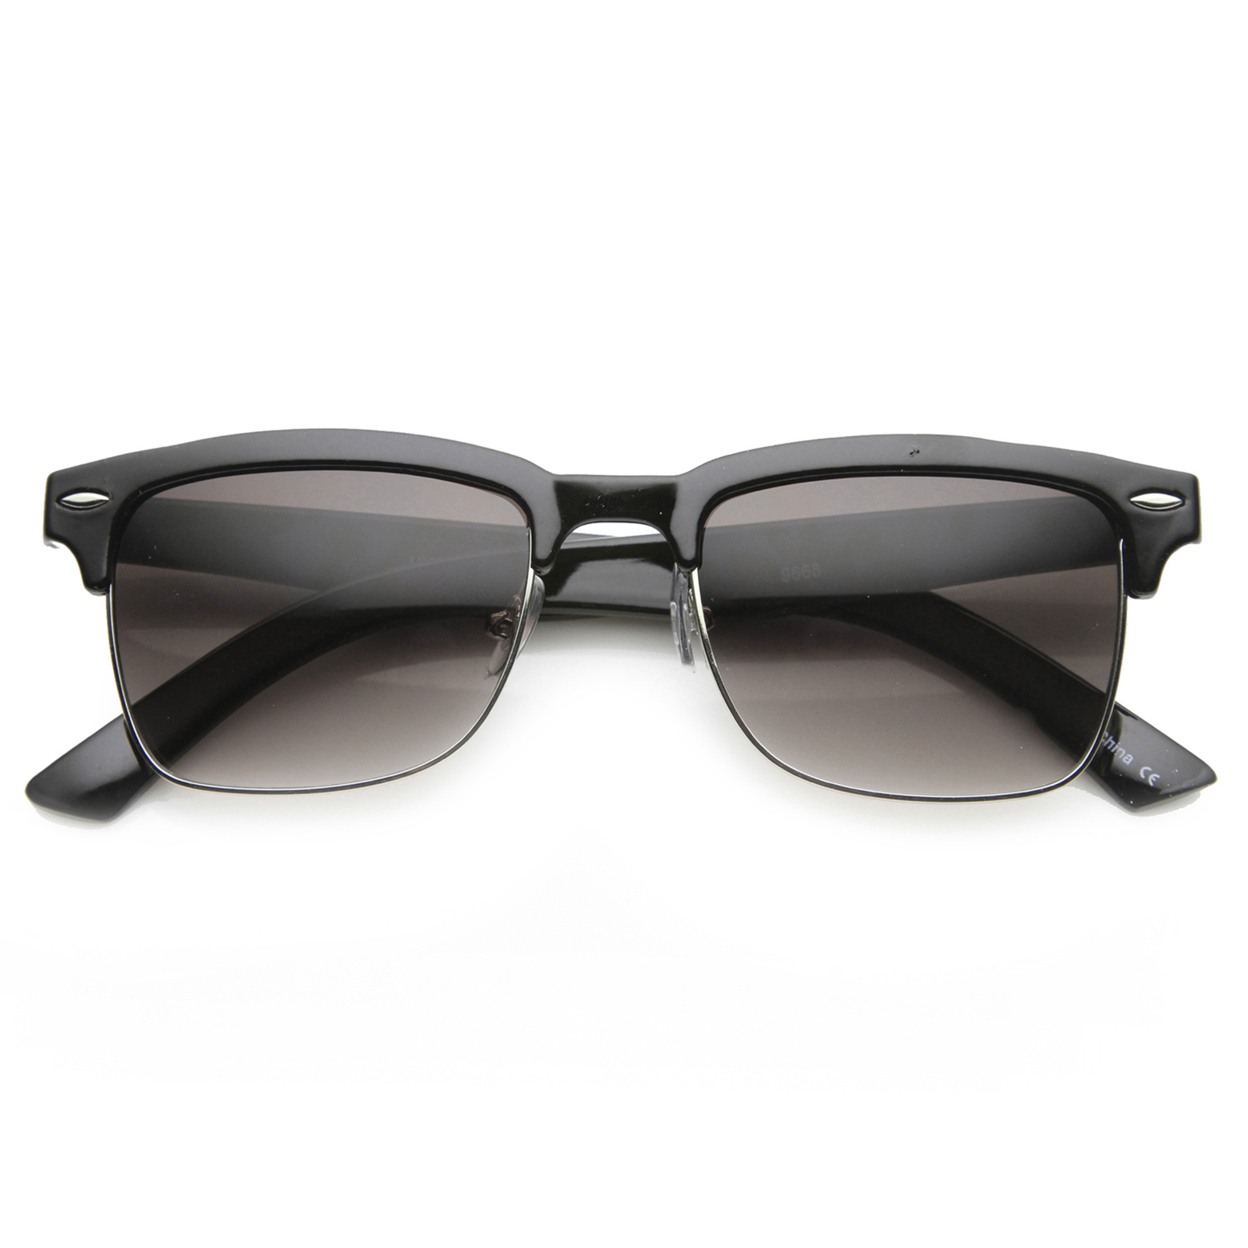 Classic Dapper Rectangular Half-Frame Horn Rimmed Sunglasses 9809 - Shiny Black-Gold / Green